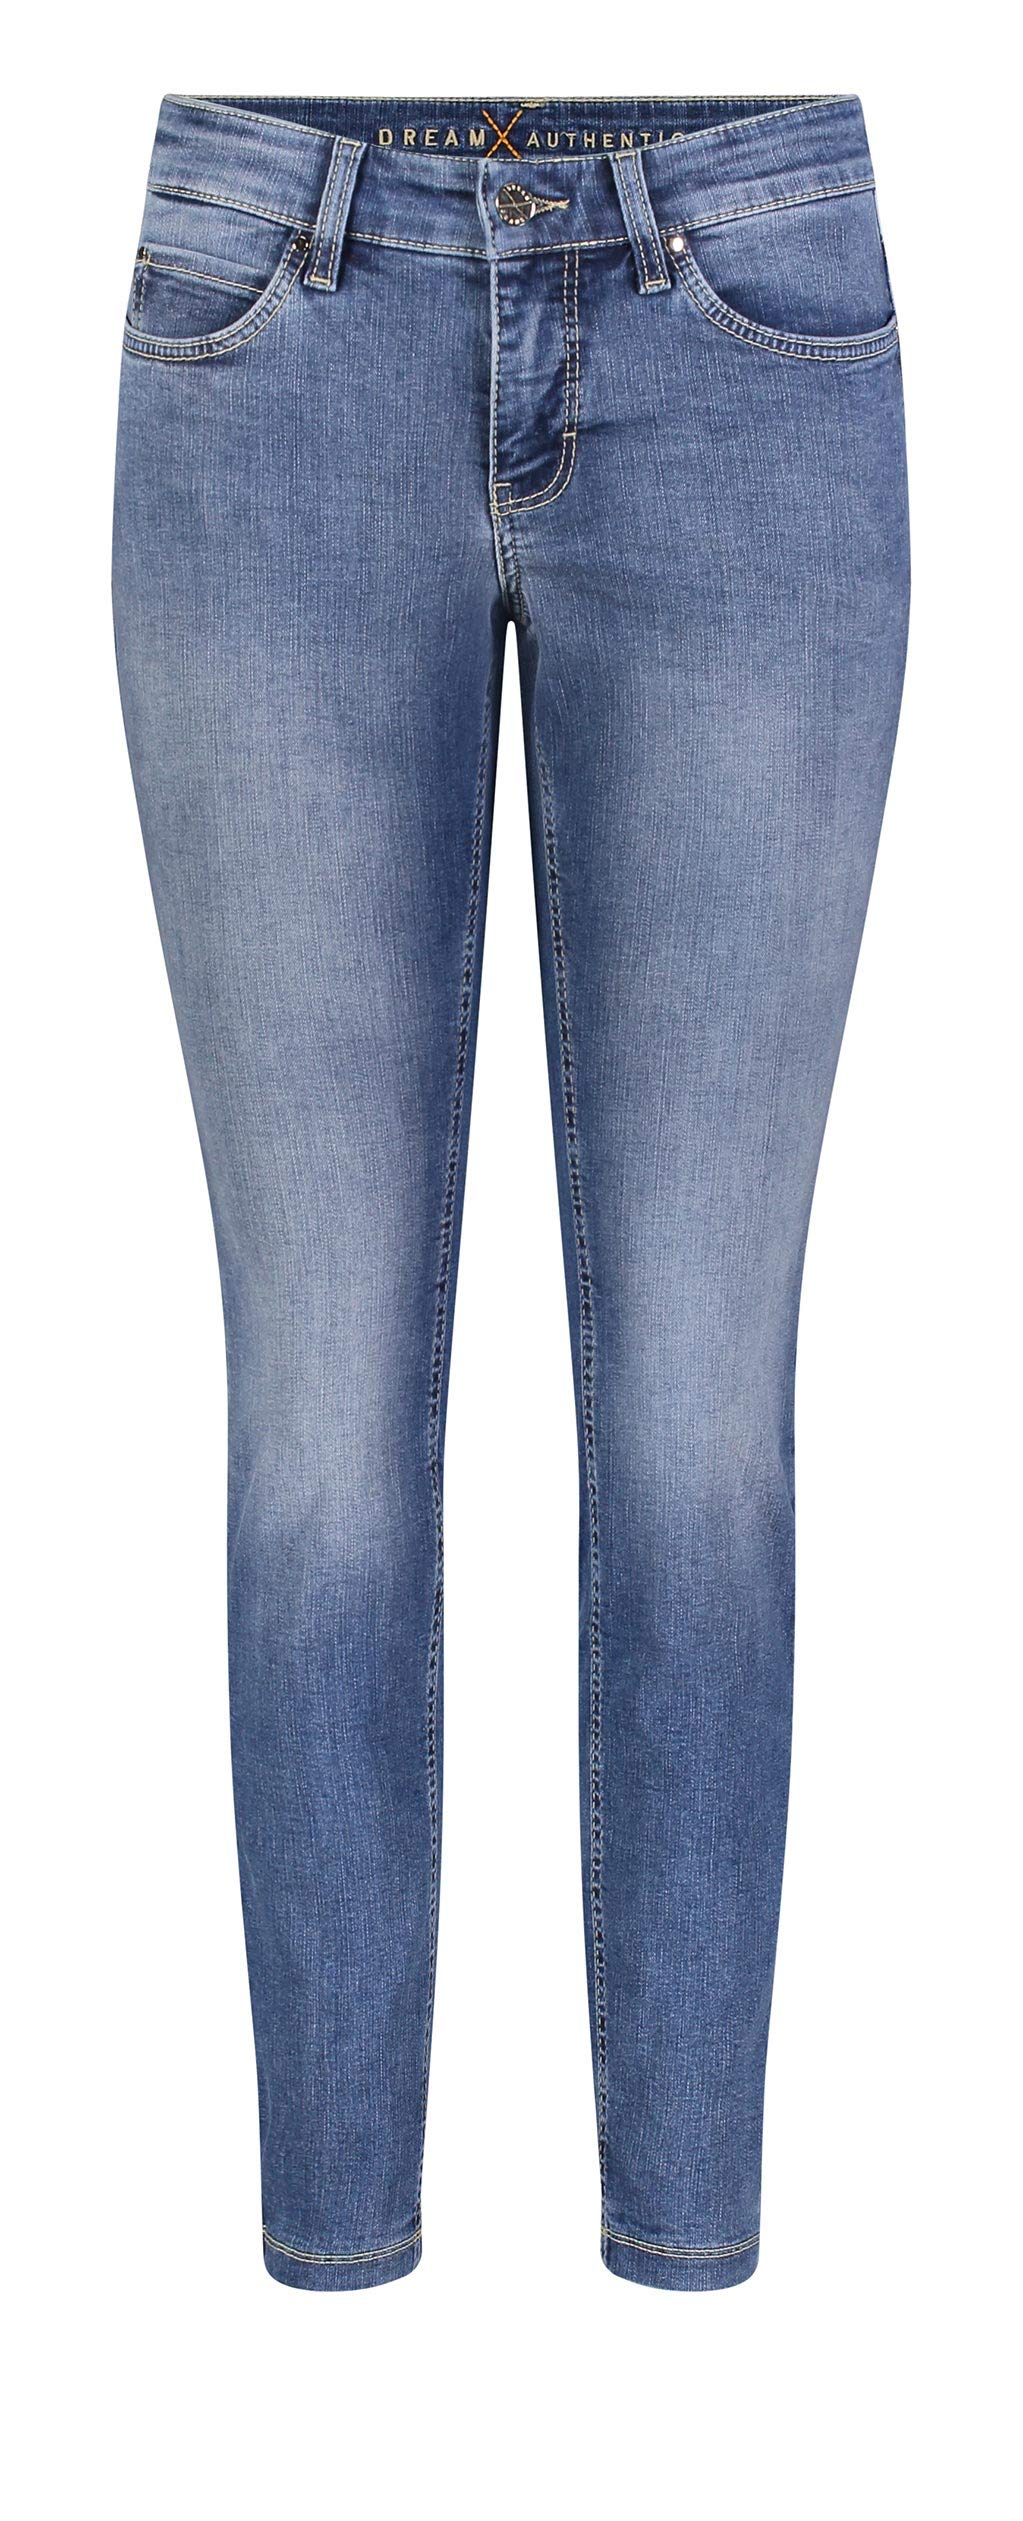 MAC Jeans Damen Dream Skinny Jeans, D432 (Authentic Summer Blue wash), 34/28, 34W / 28L, 5457.90-0356L_D432_(34/28)